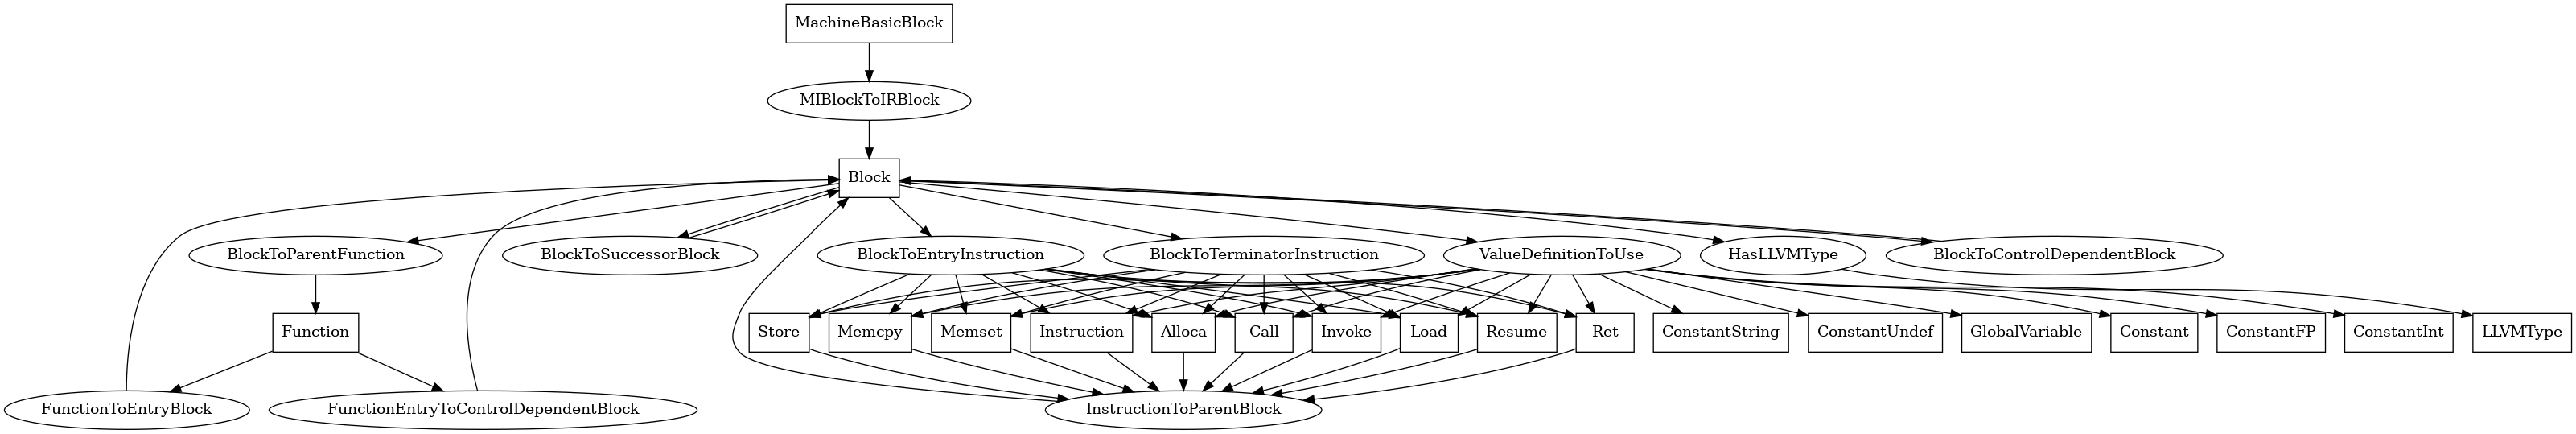 Entity-relationship diagram for Block nodes